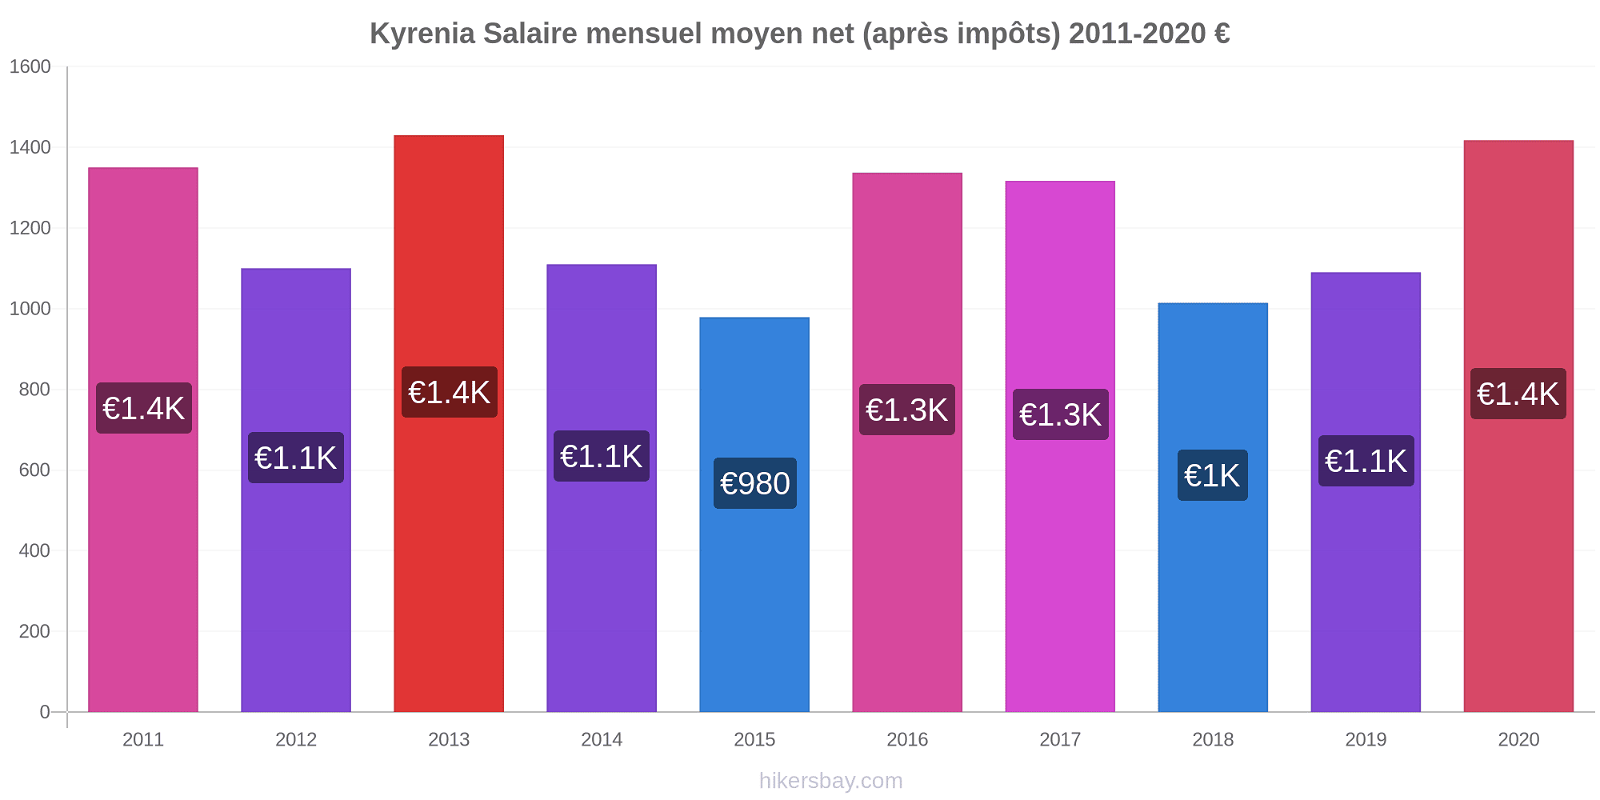 Kyrenia changements de prix Salaire mensuel Net (après impôts) hikersbay.com